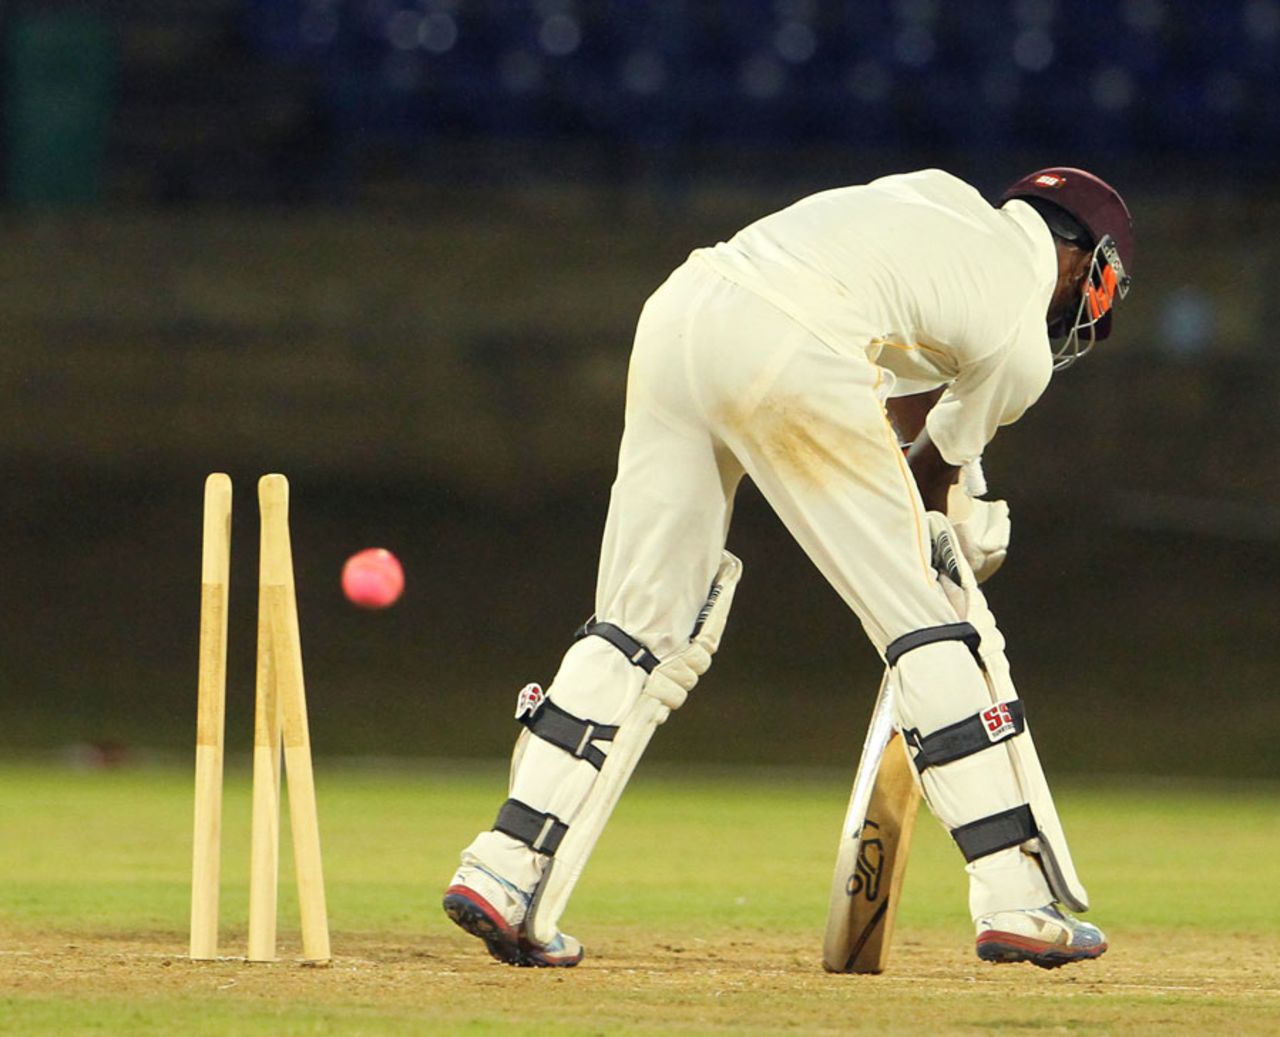 Tonito Willett is bowled, Trinidad & Tobago v Leeward Islands, Trinidad, 2nd day, March 15, 2014